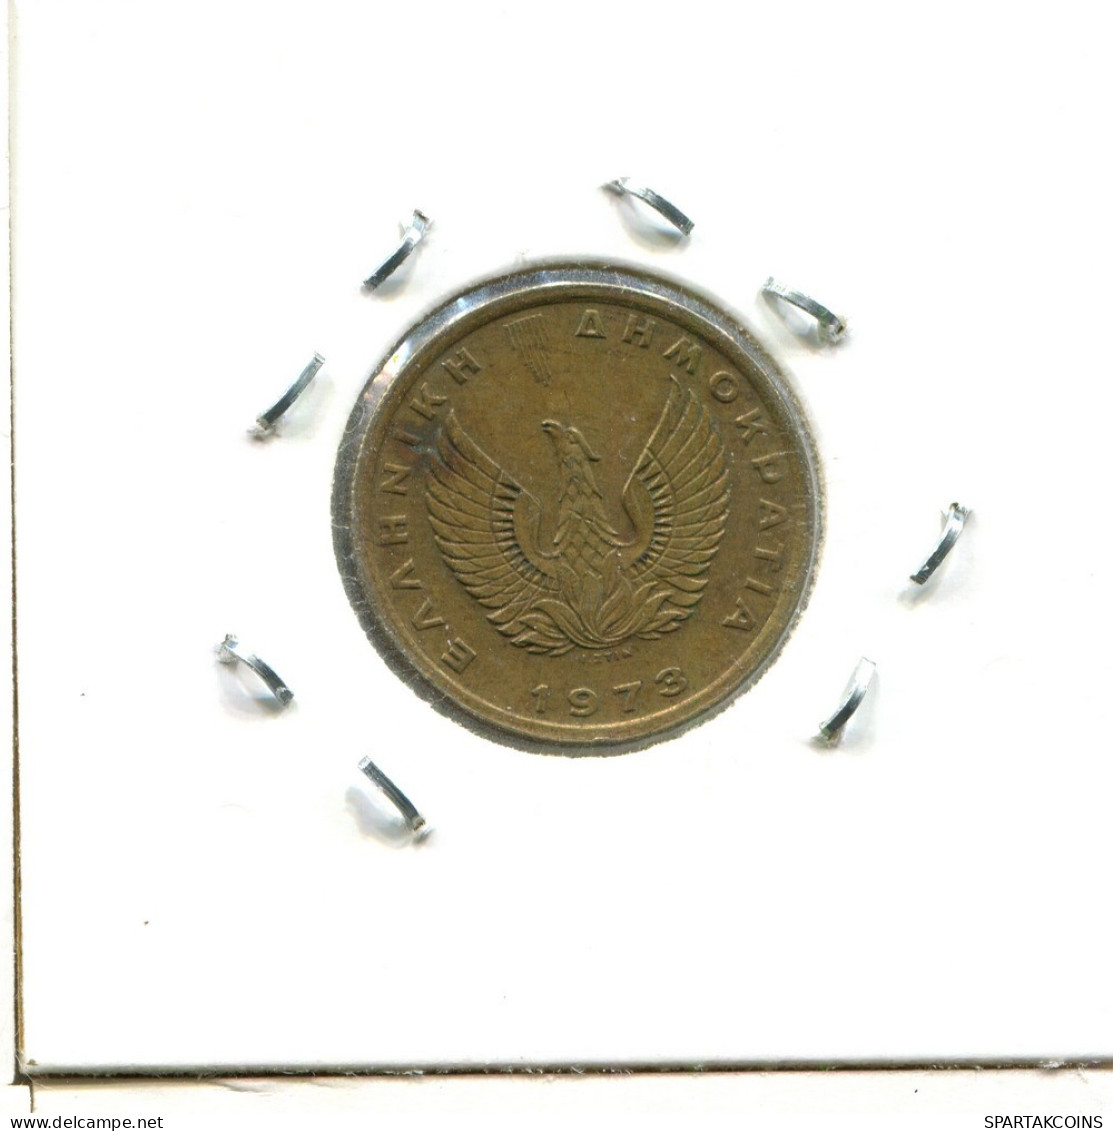 1 DRACHMES 1973 GREECE Coin #AS433.U.A - Grèce